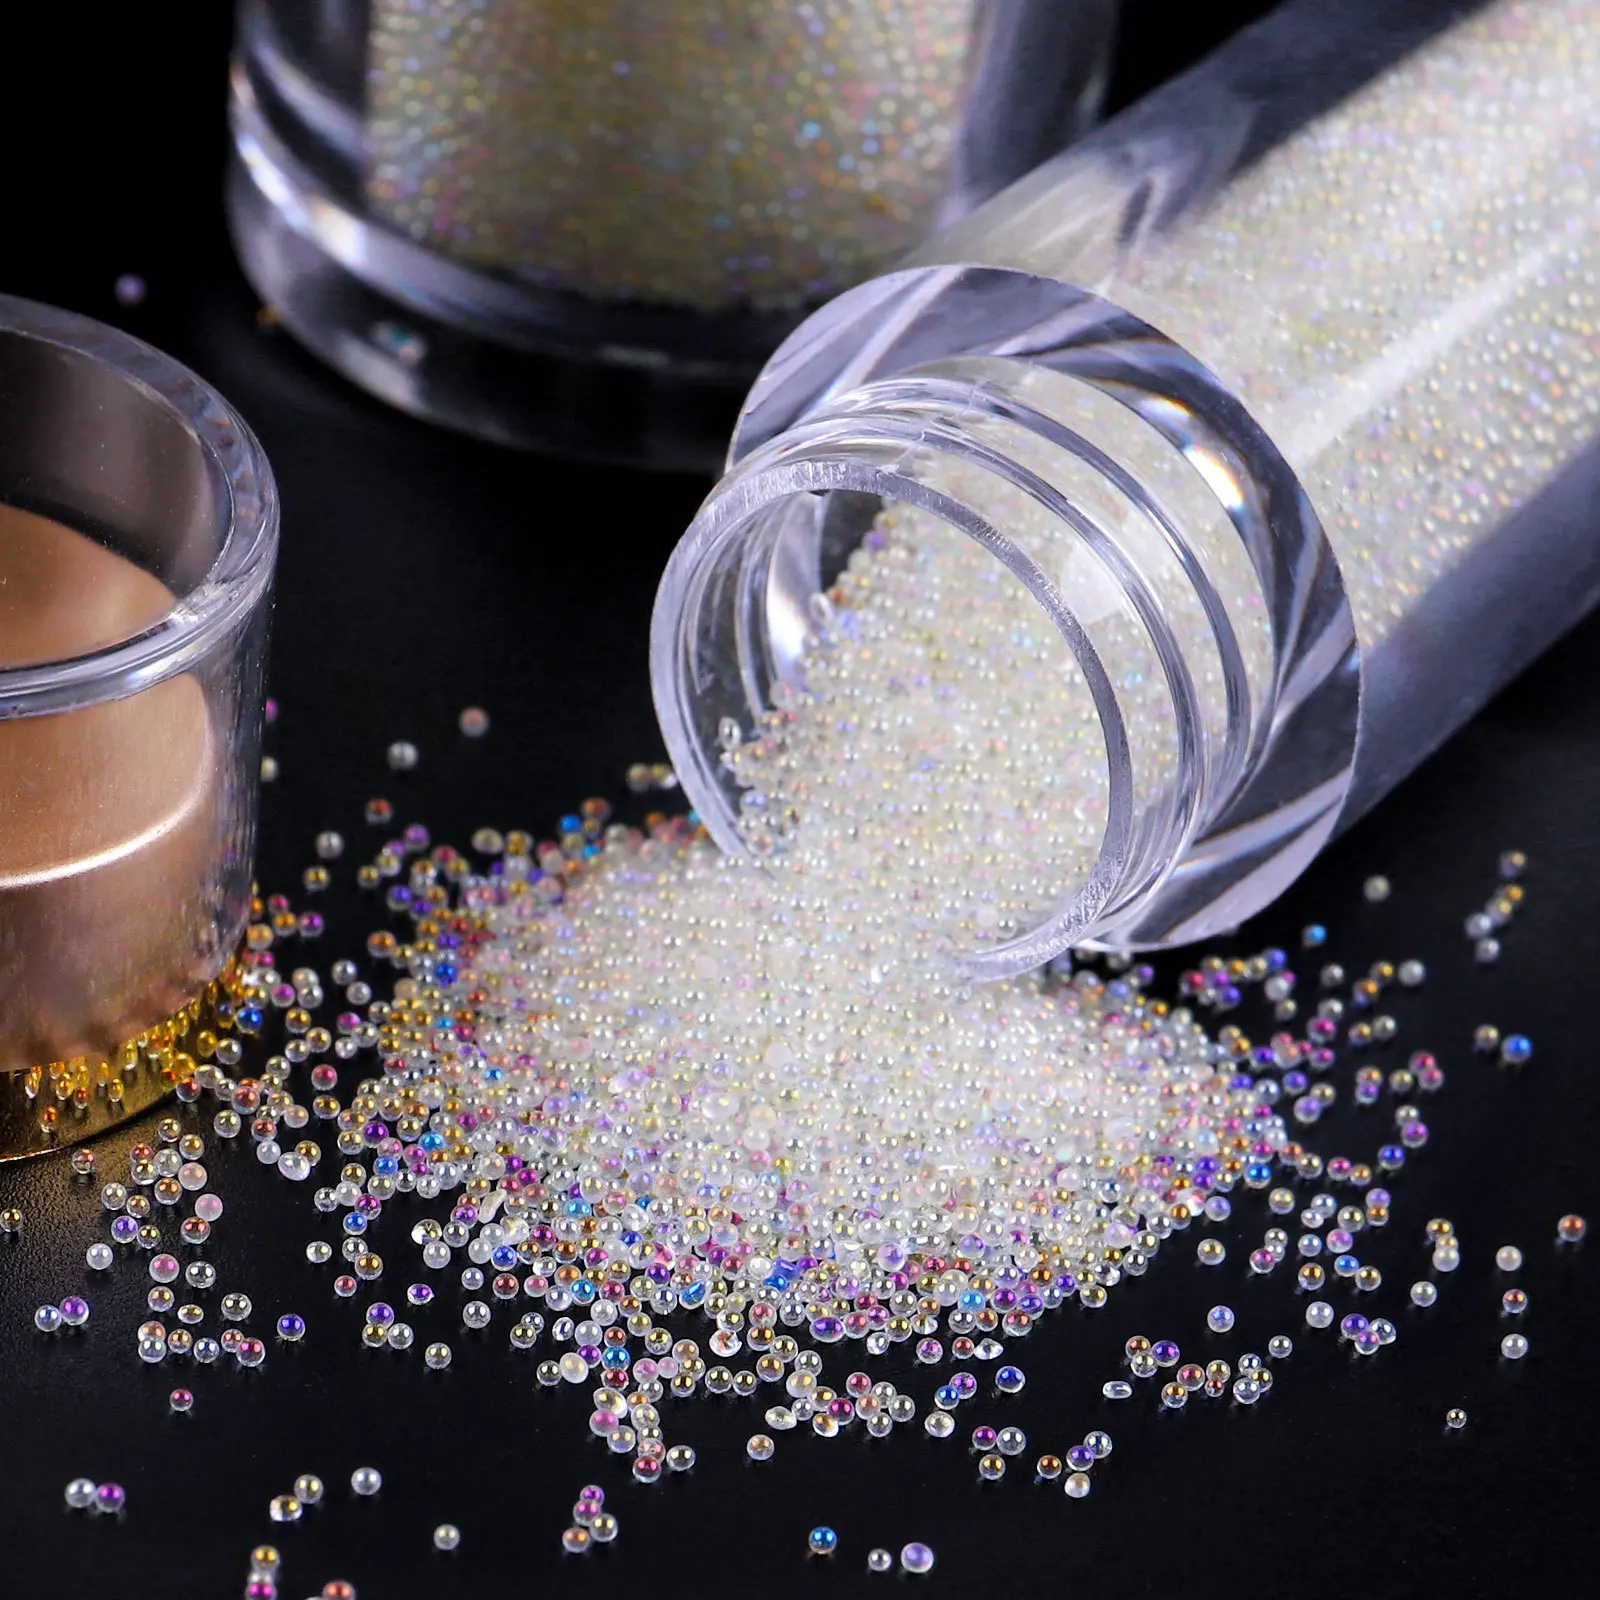 Glass Micro Mini Cut Glitter (1 of 2880PCS)-1.2mm (Clear AB, & Champagne)  Nail Design Kit Glitter Bling Sparkle Crystals